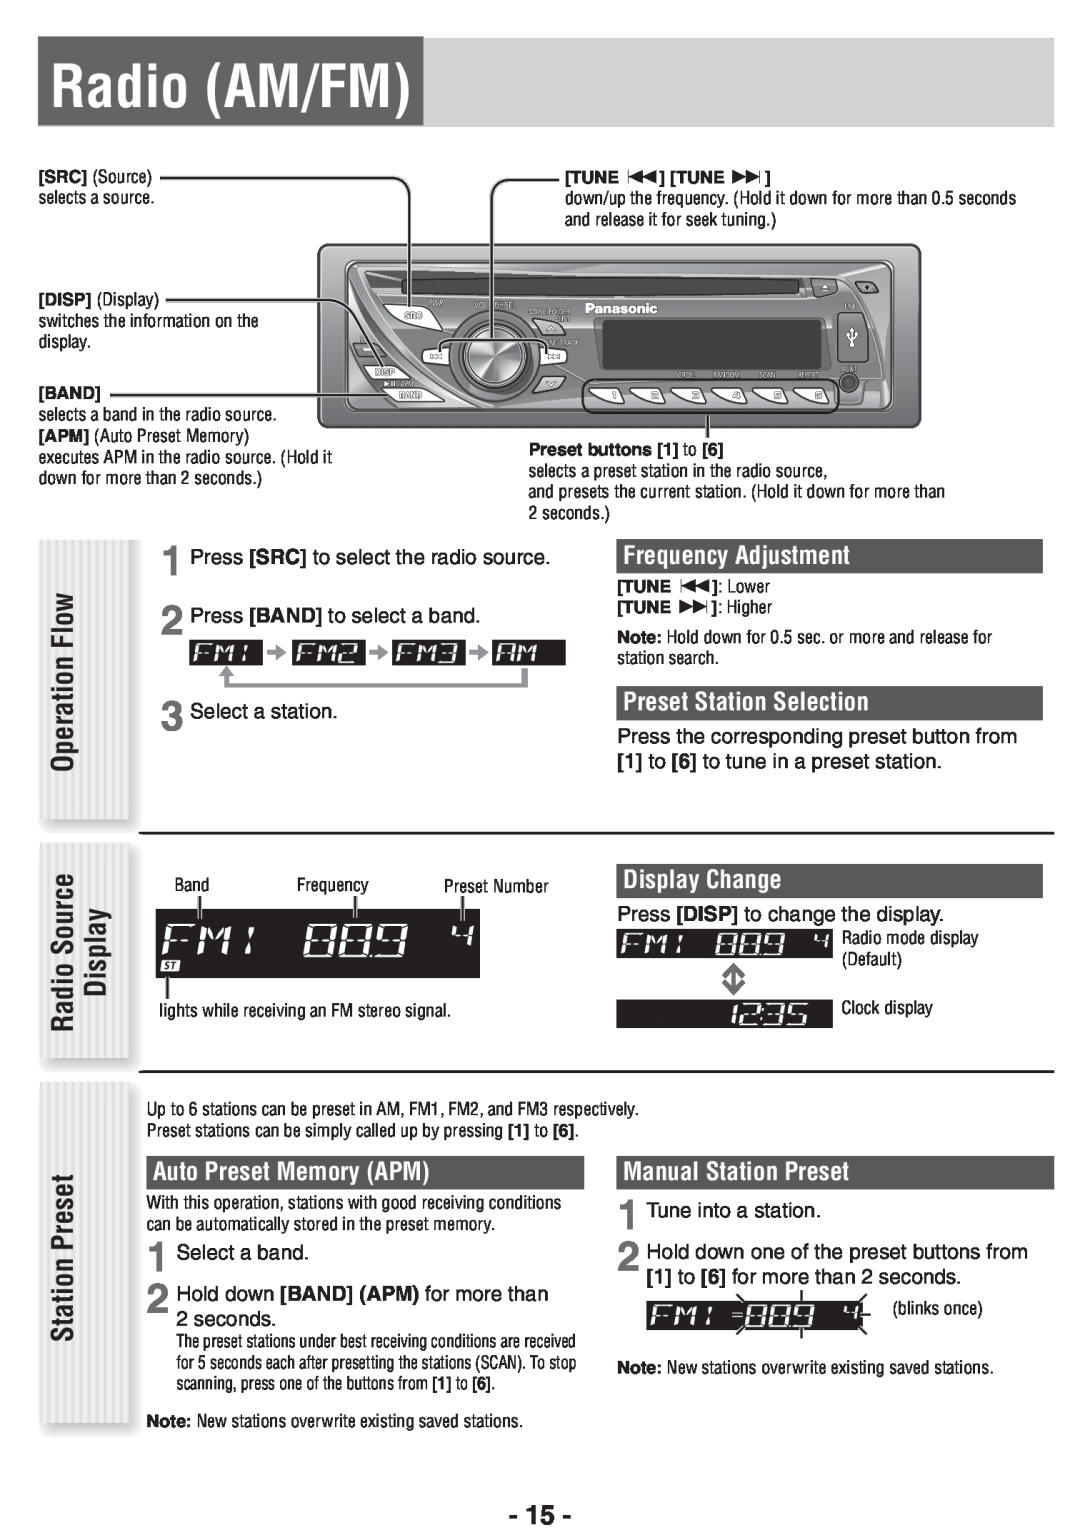 Panasonic CQ-RX100U Radio AM/FM, Operation Flow, Radio Source, Display, Station Preset, Frequency Adjustment, Band 